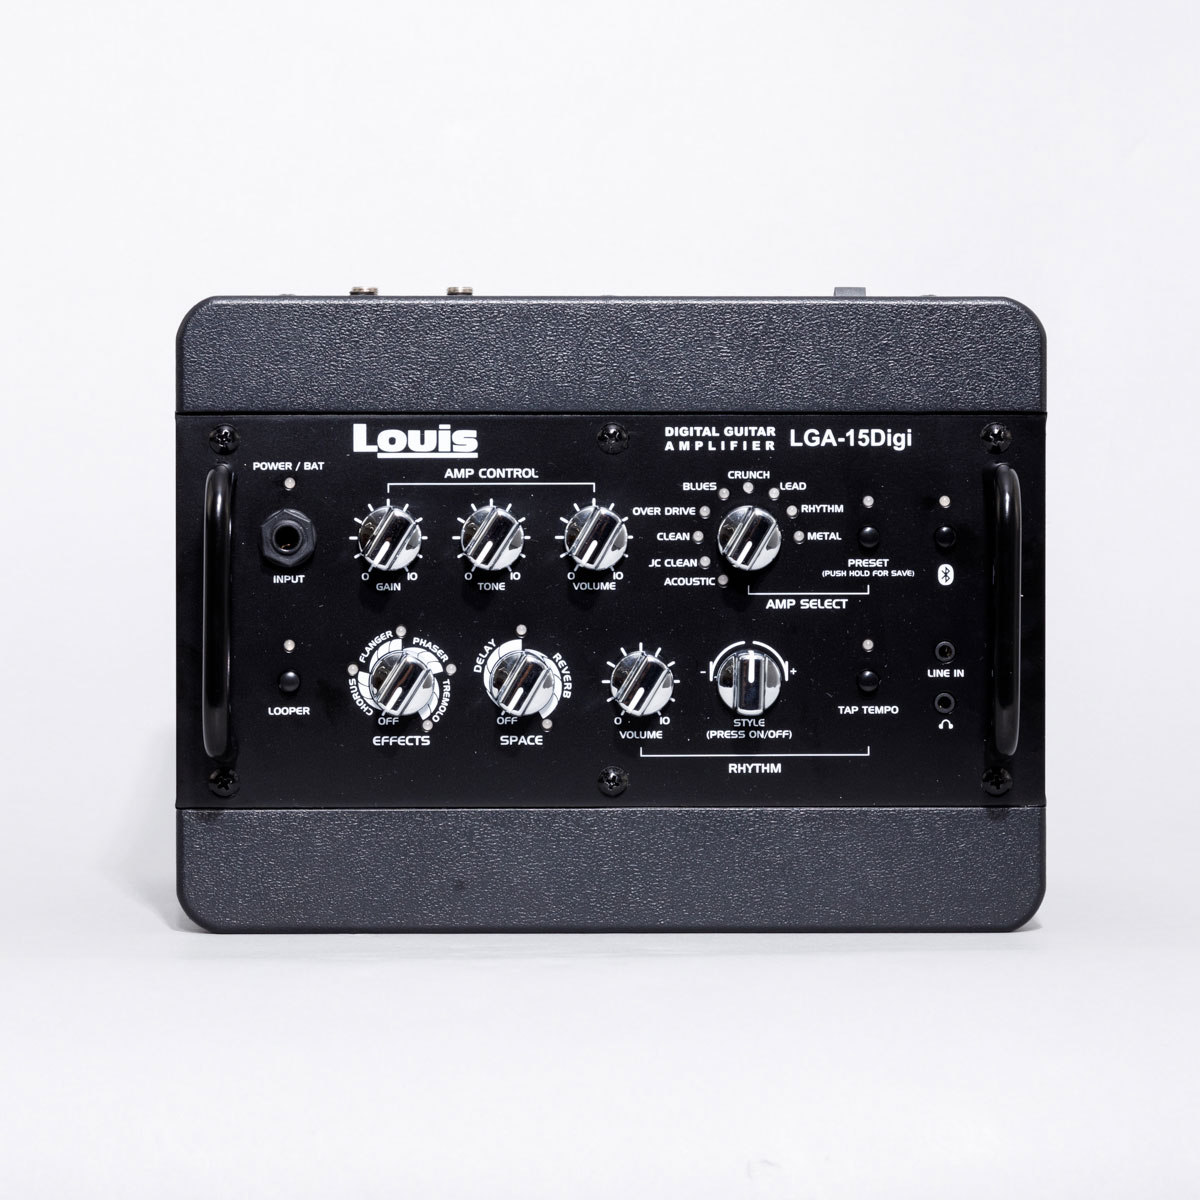 Louis LGA-15Digi ギターアンプ 15W リズムマシン・ルーパー搭載 充電 